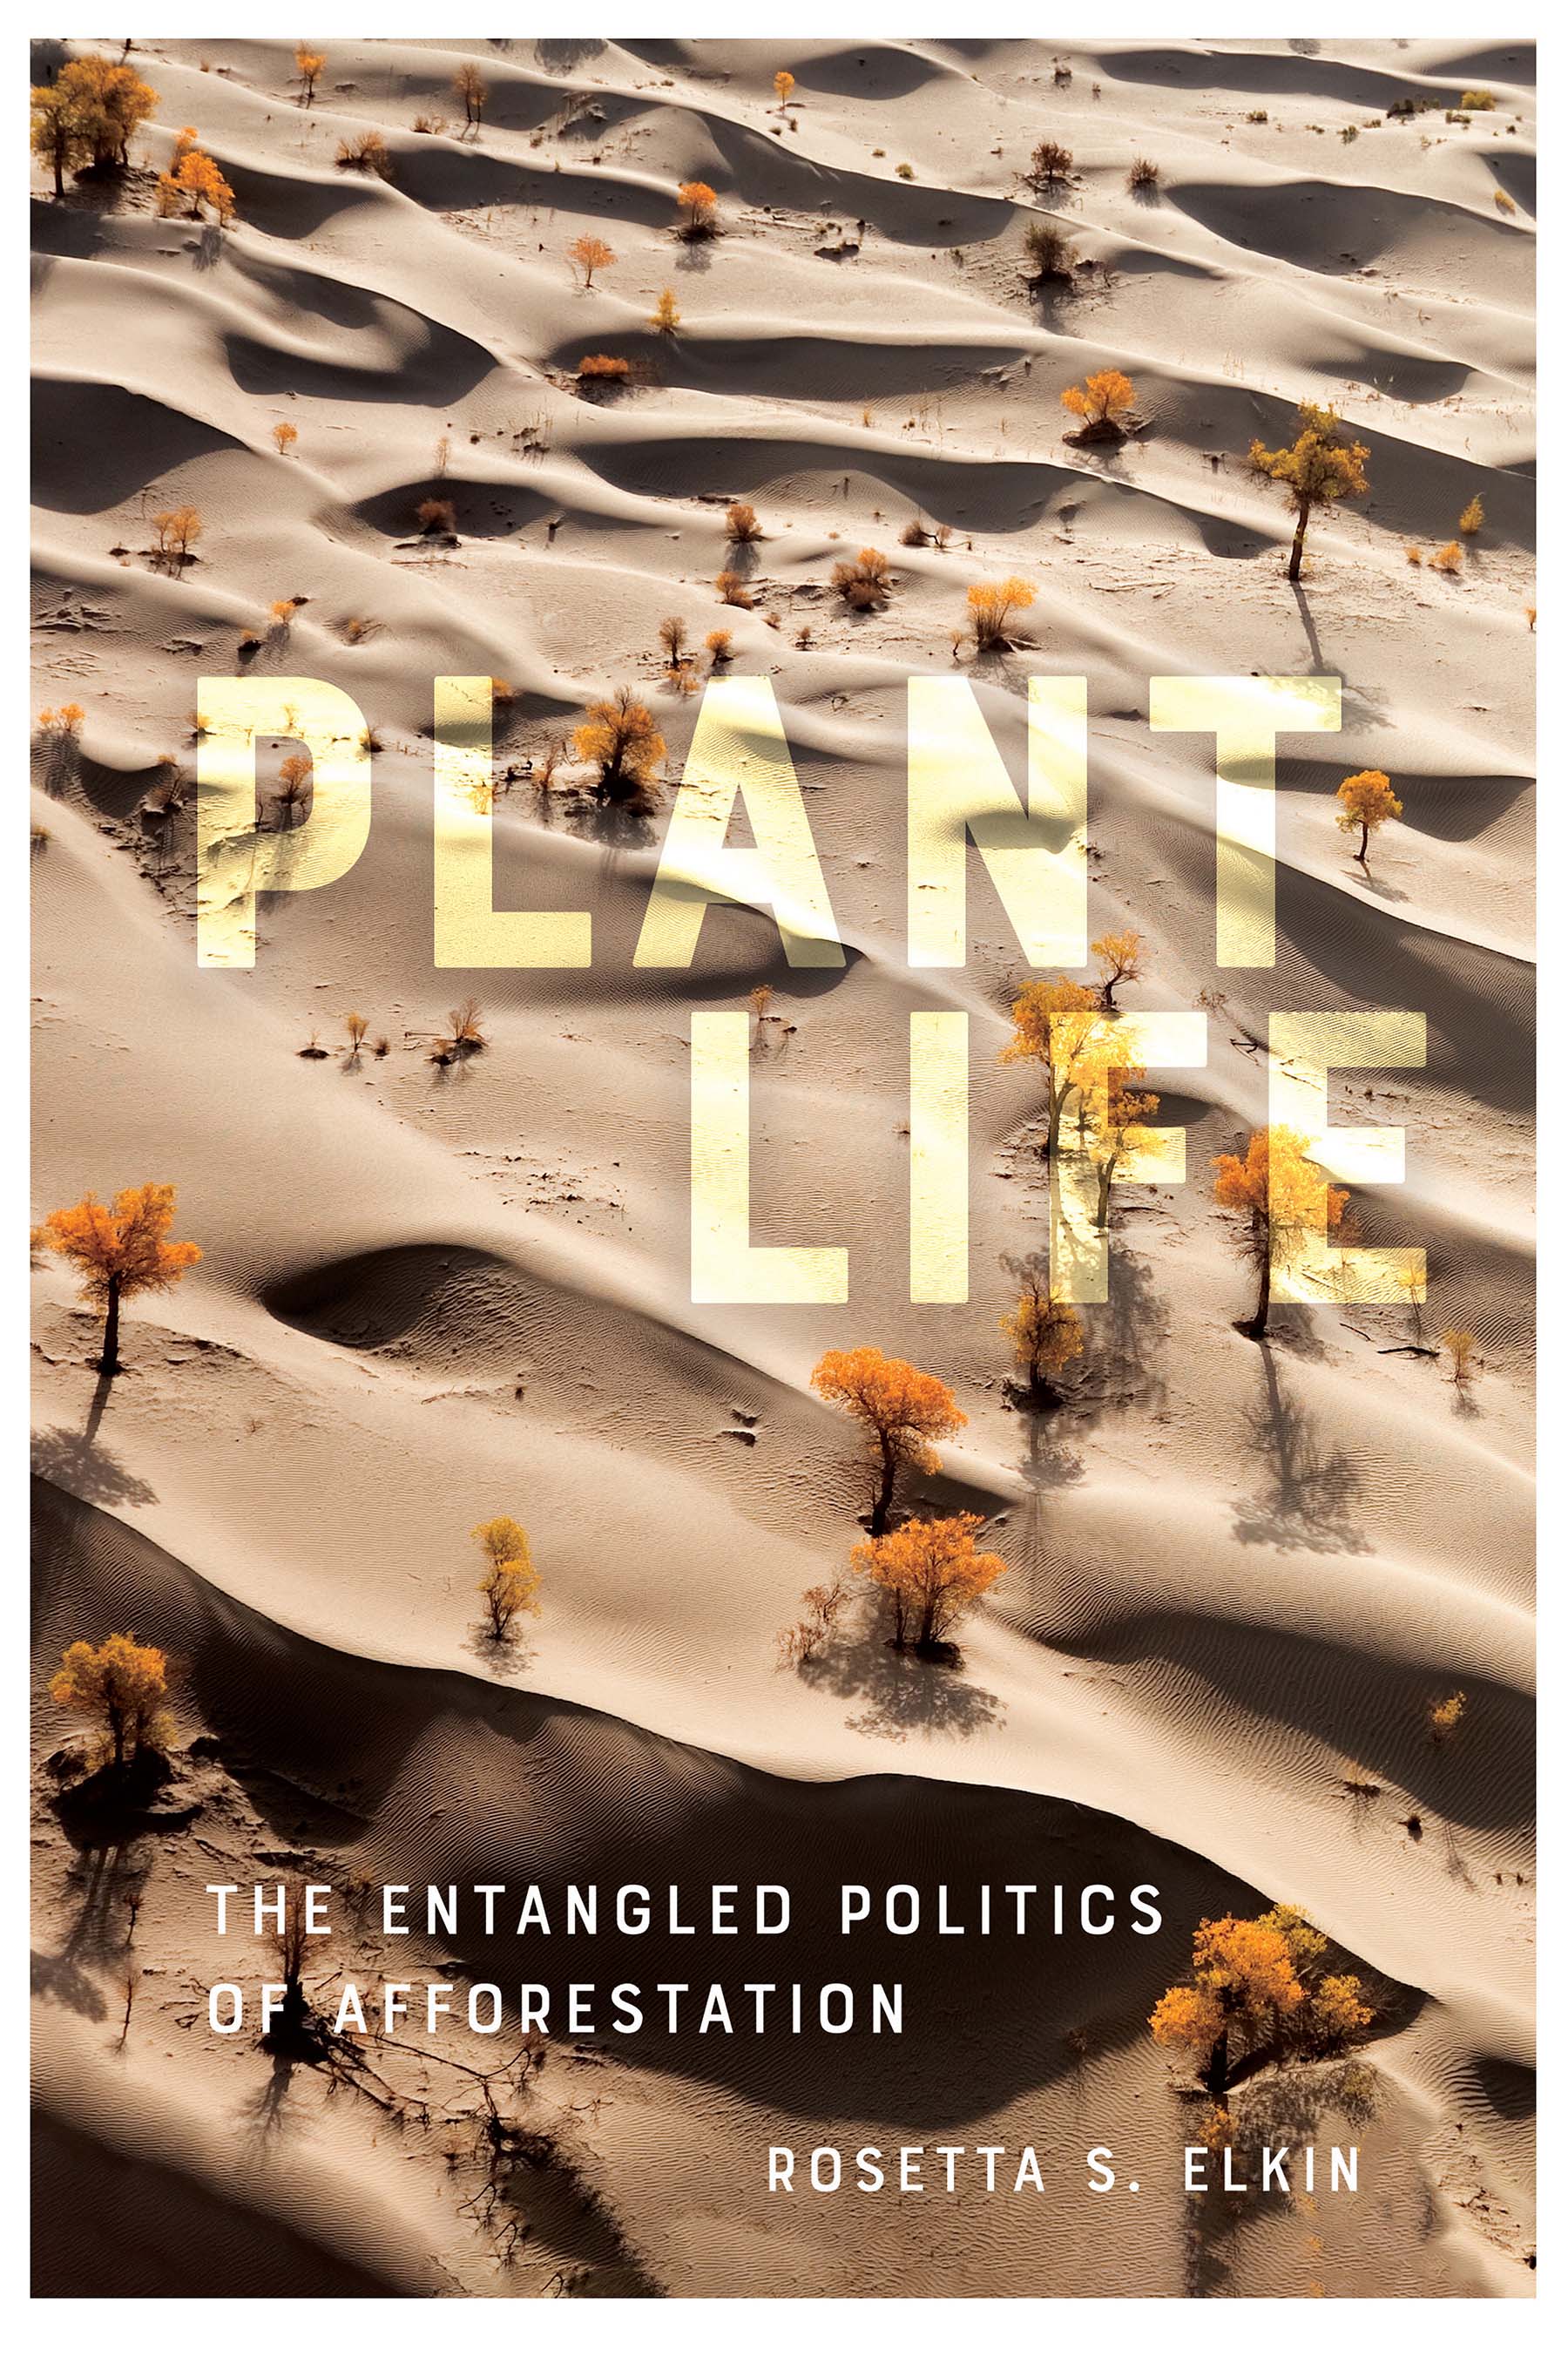 Cover of Rosetta Elkin's Book Plant Life